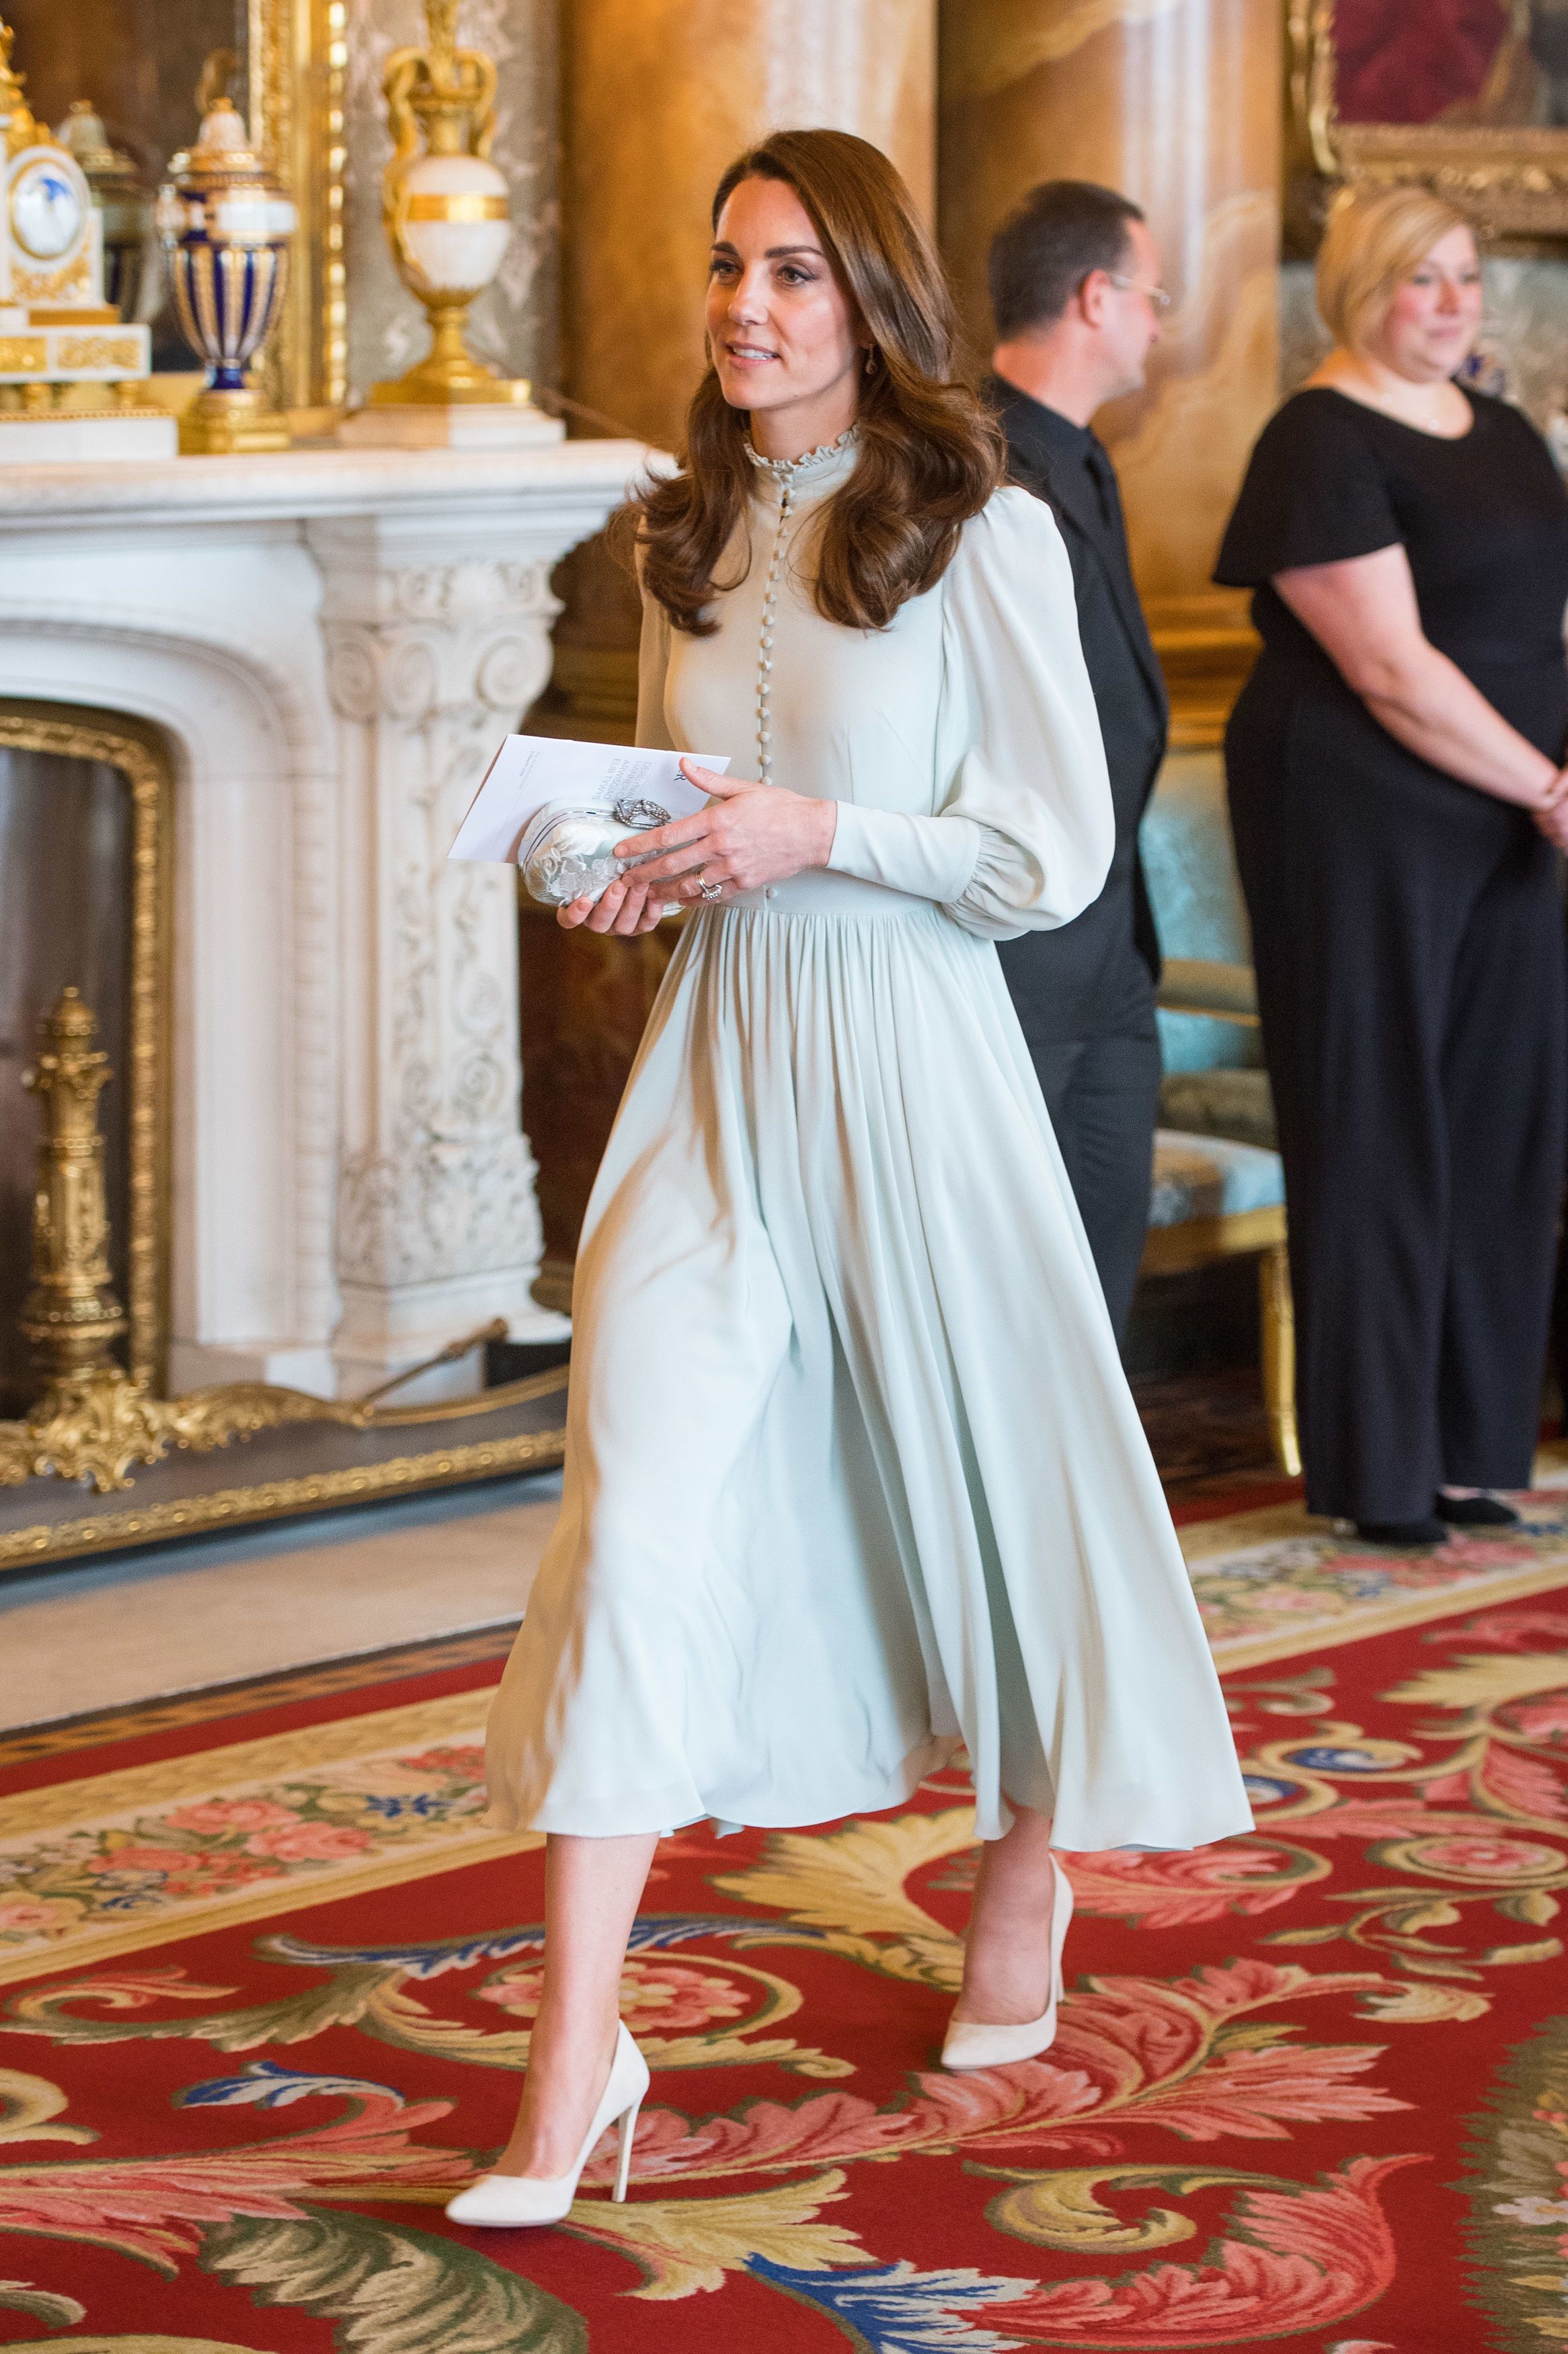 Какую награду получила стилист Кейт Миддлтон от принца Уильяма (фото)